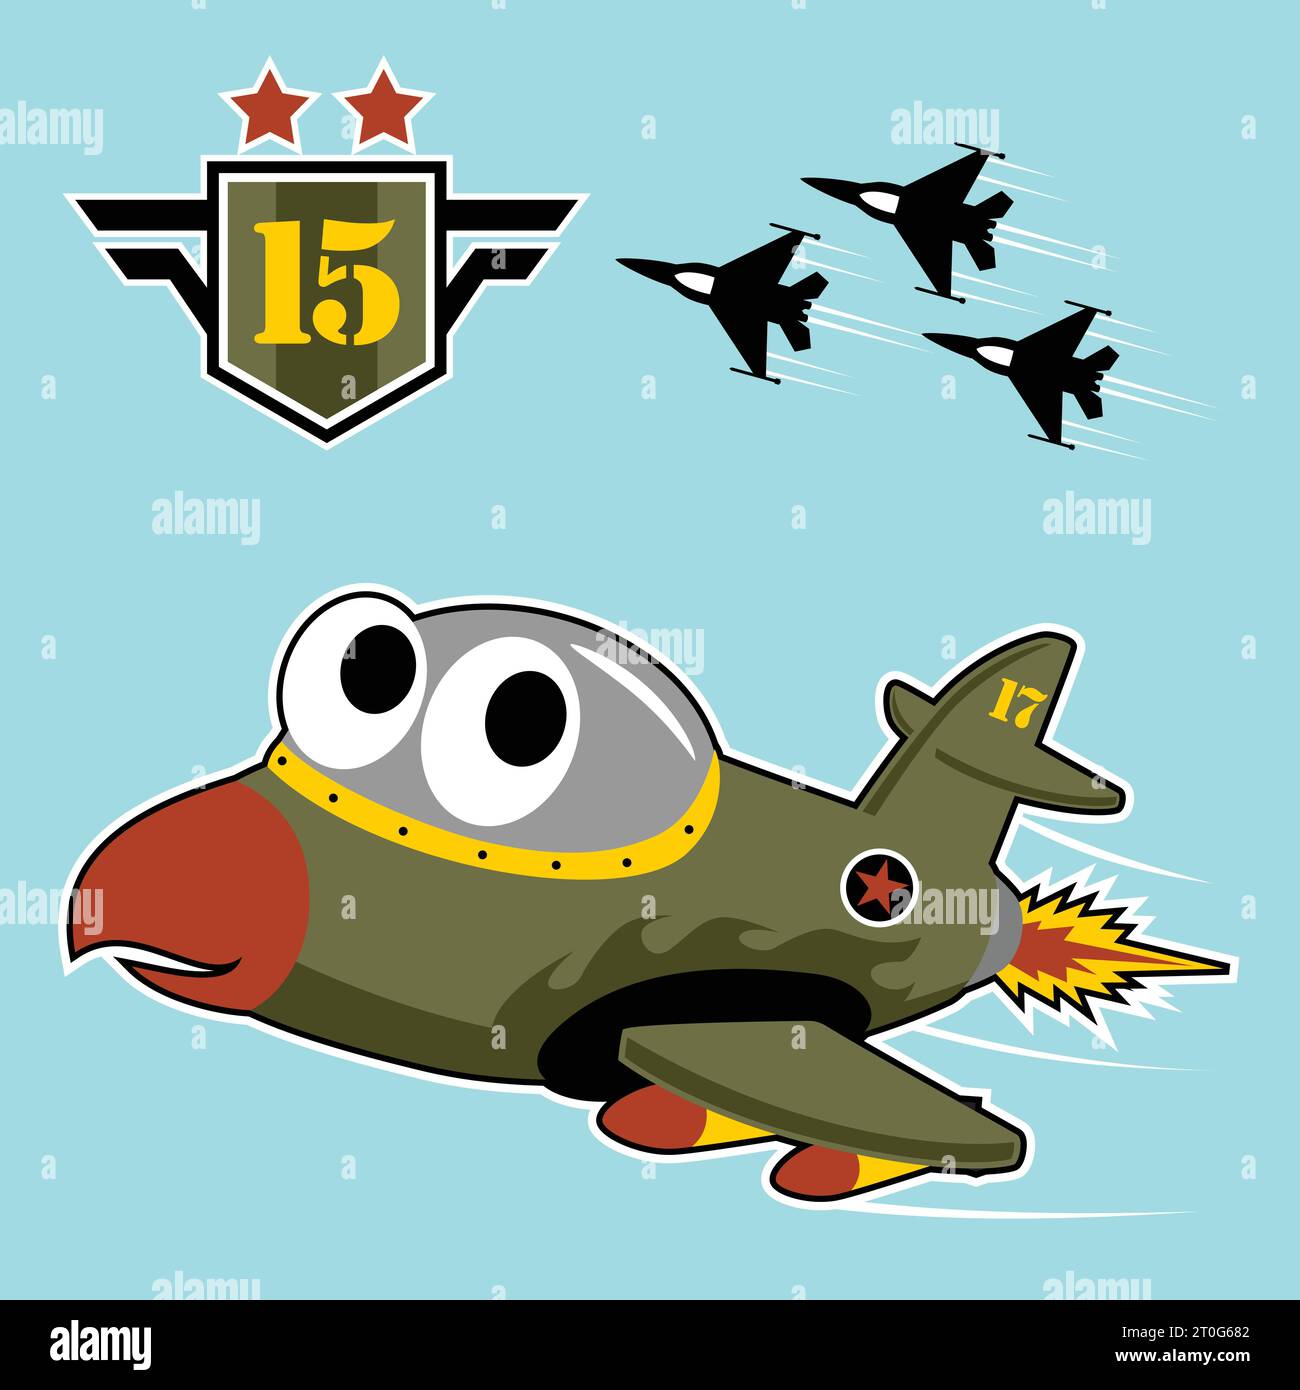 Funny warplane with a military logo, vector cartoon illustration Stock Vector